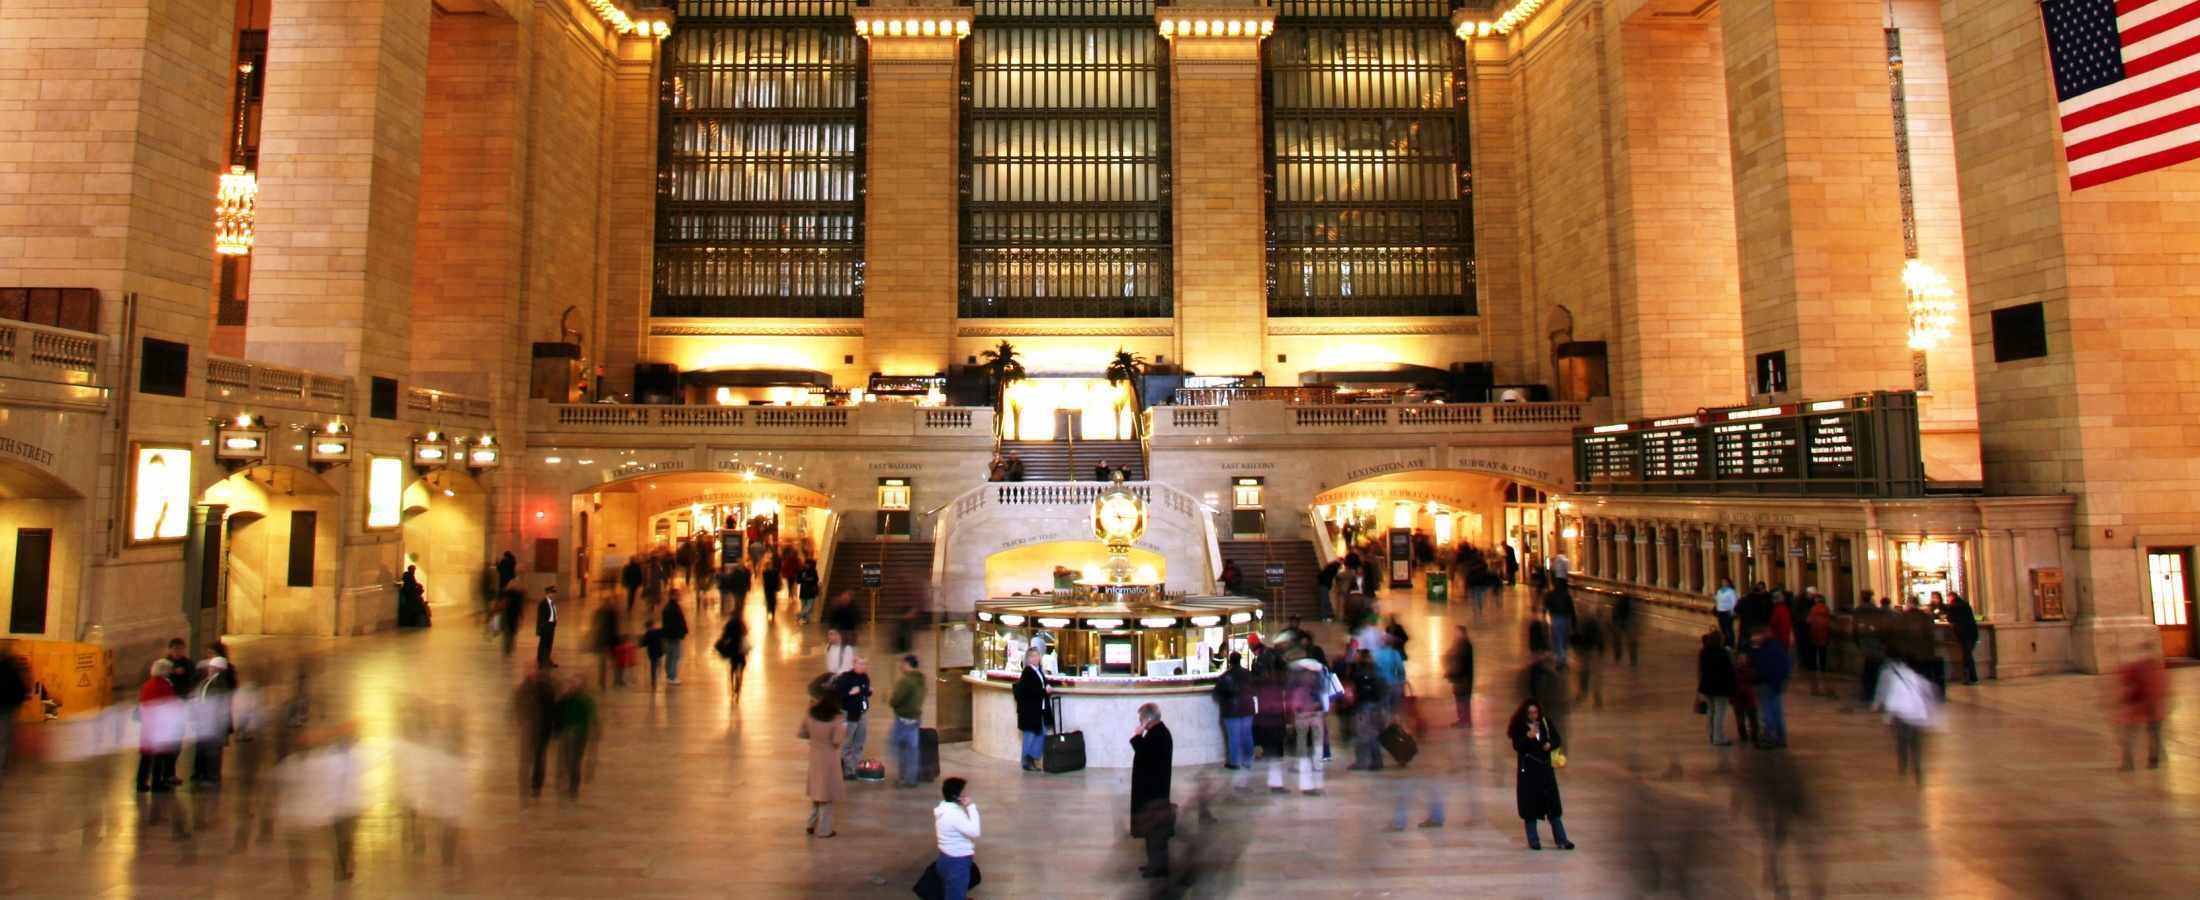 Center of Grand Central Station